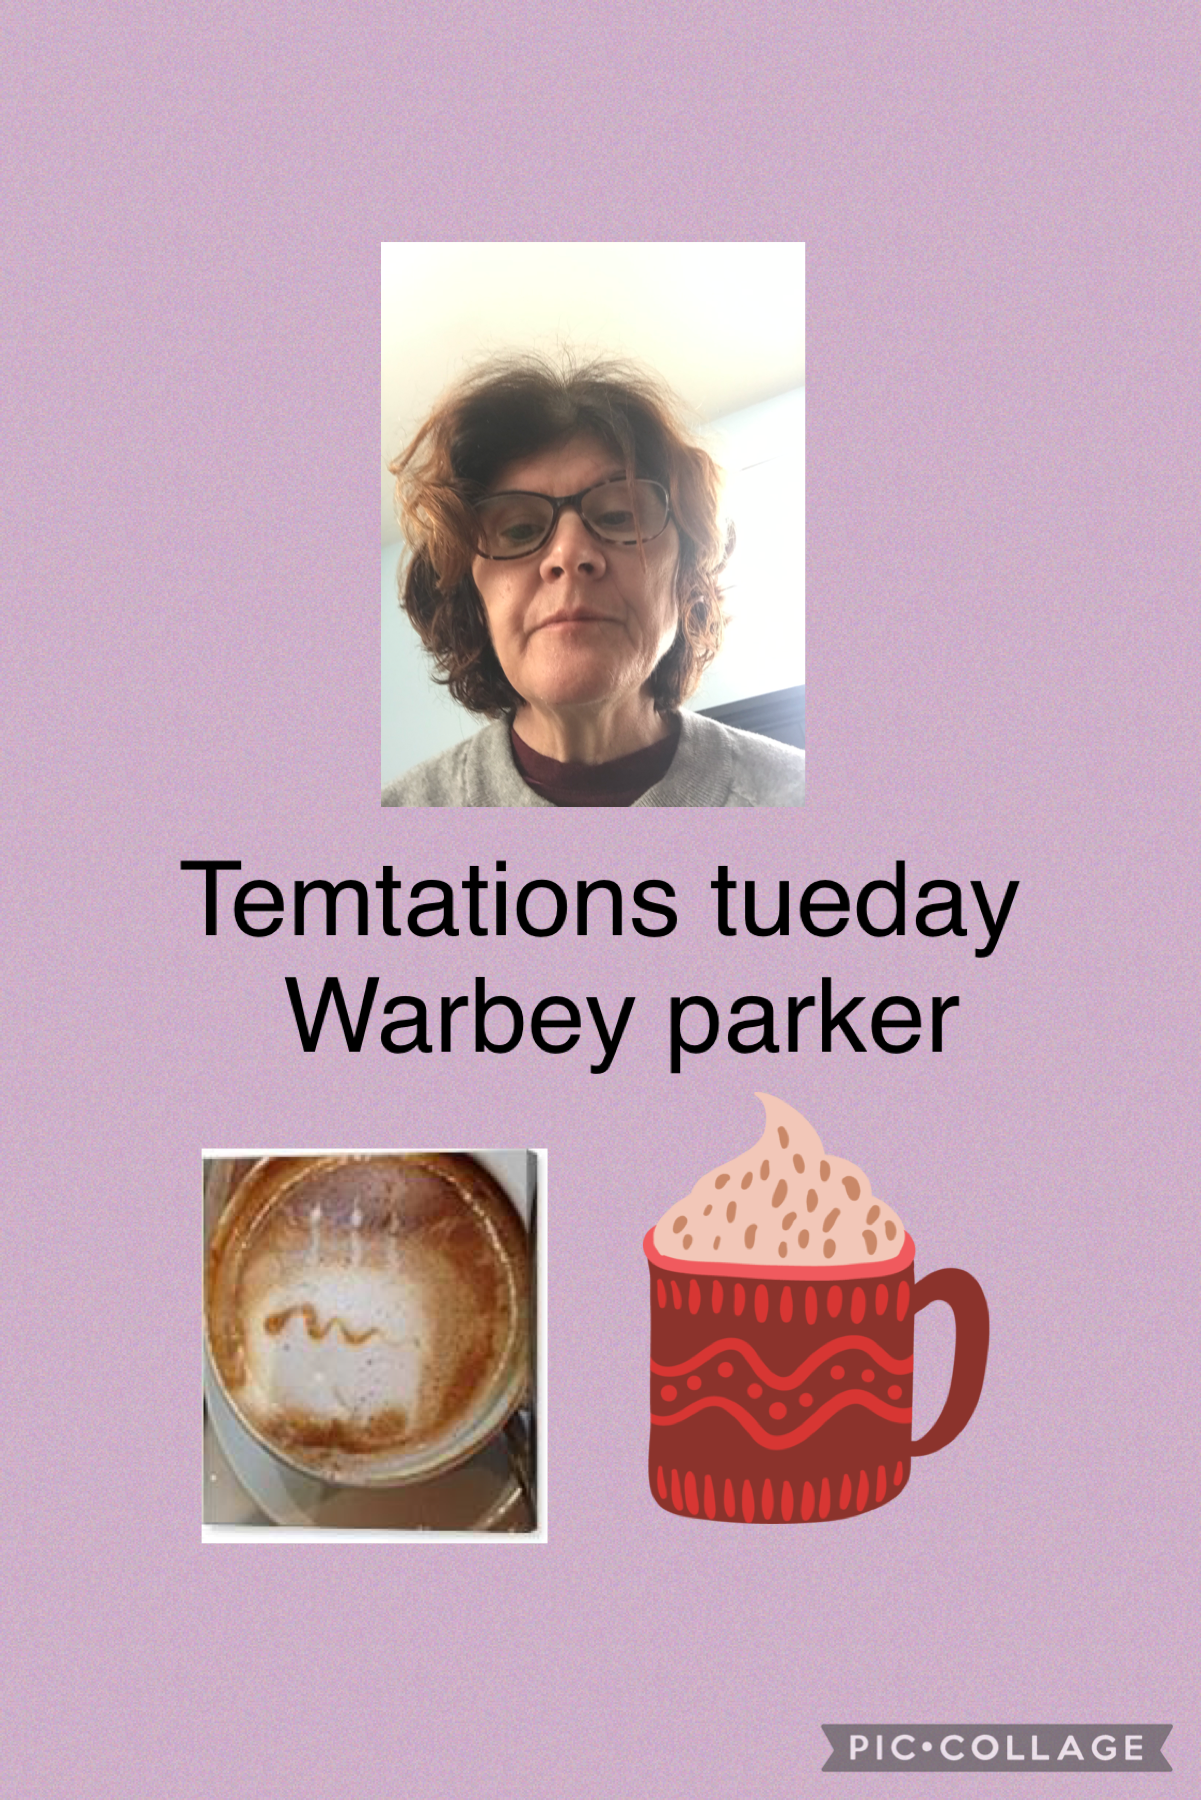 #warbey parker birthday. Cake. Latte